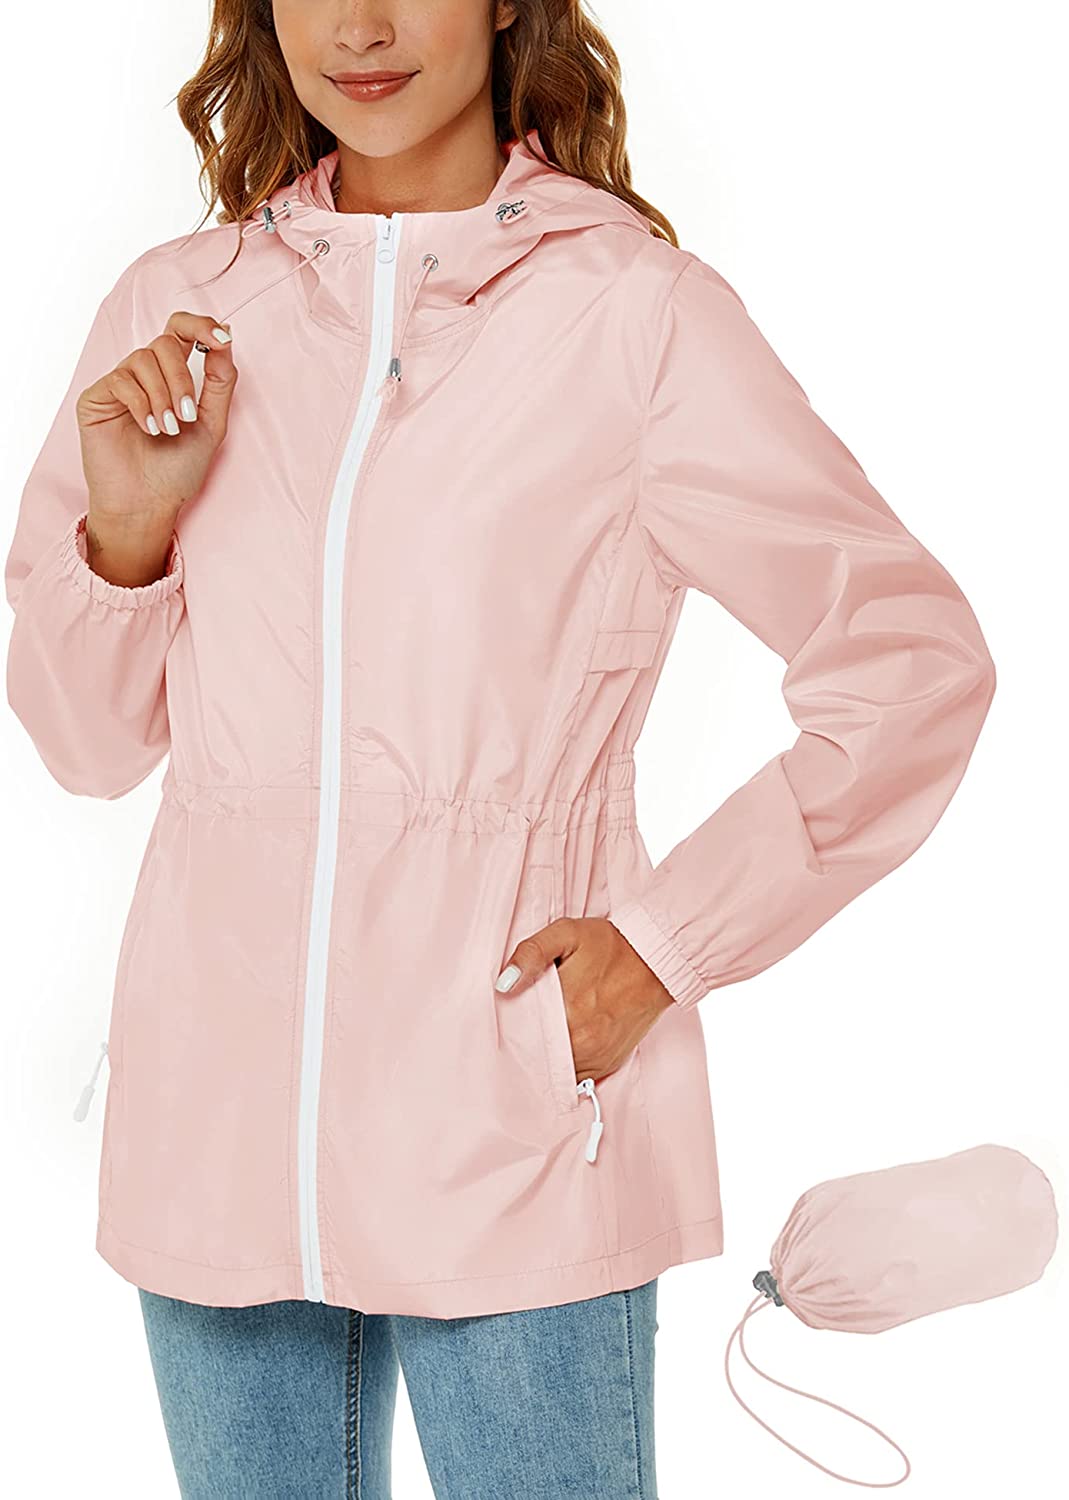 Avoogue Raincoat Women Lightweight Waterproof Rain Jackets Packable Outdoor Hooded Windbreaker 